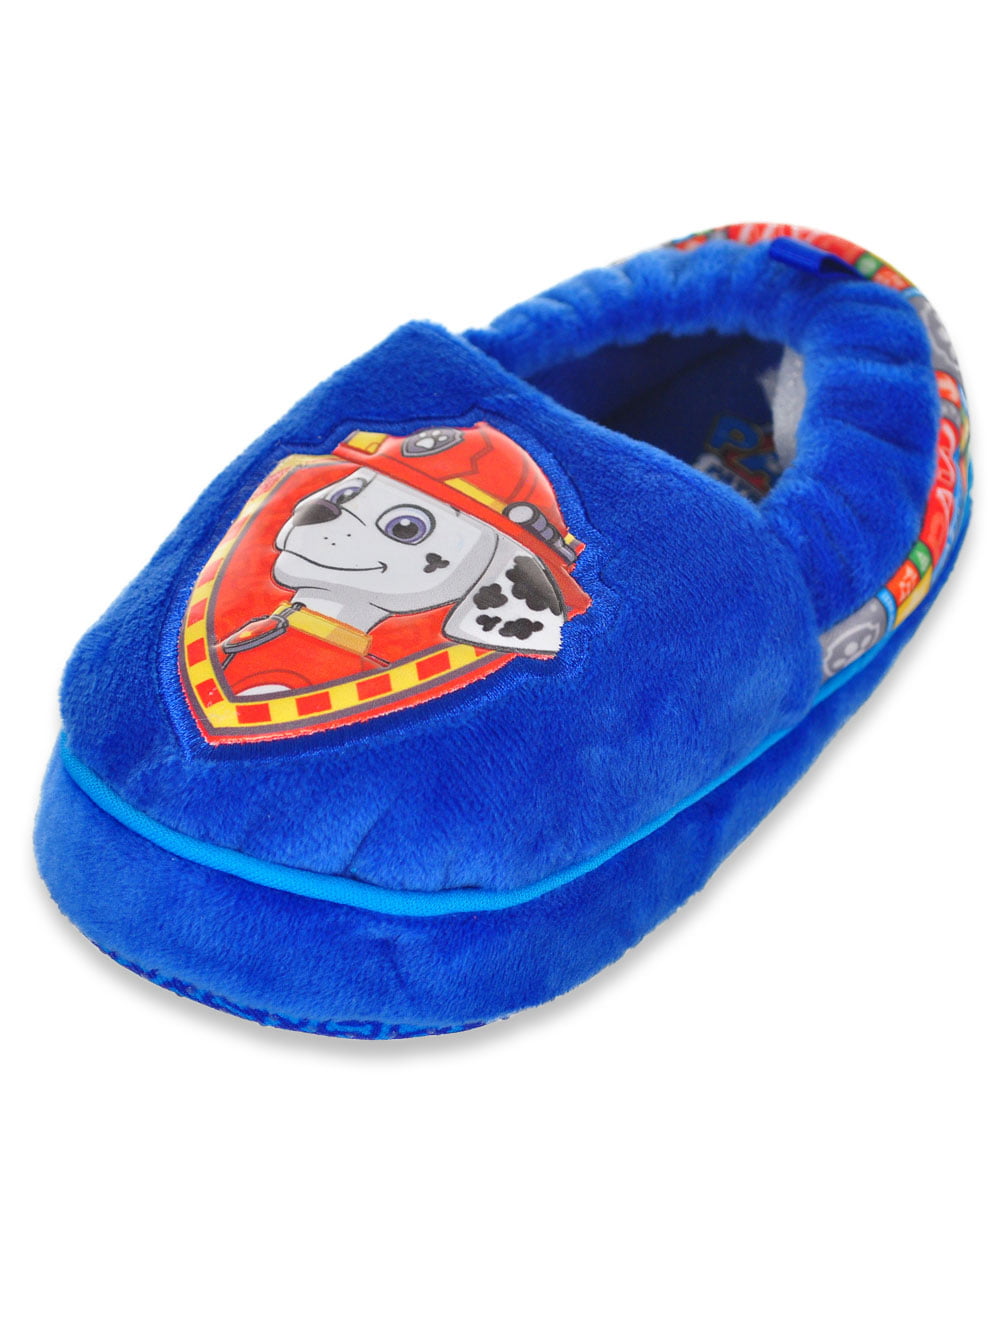 paw patrol slippers walmart